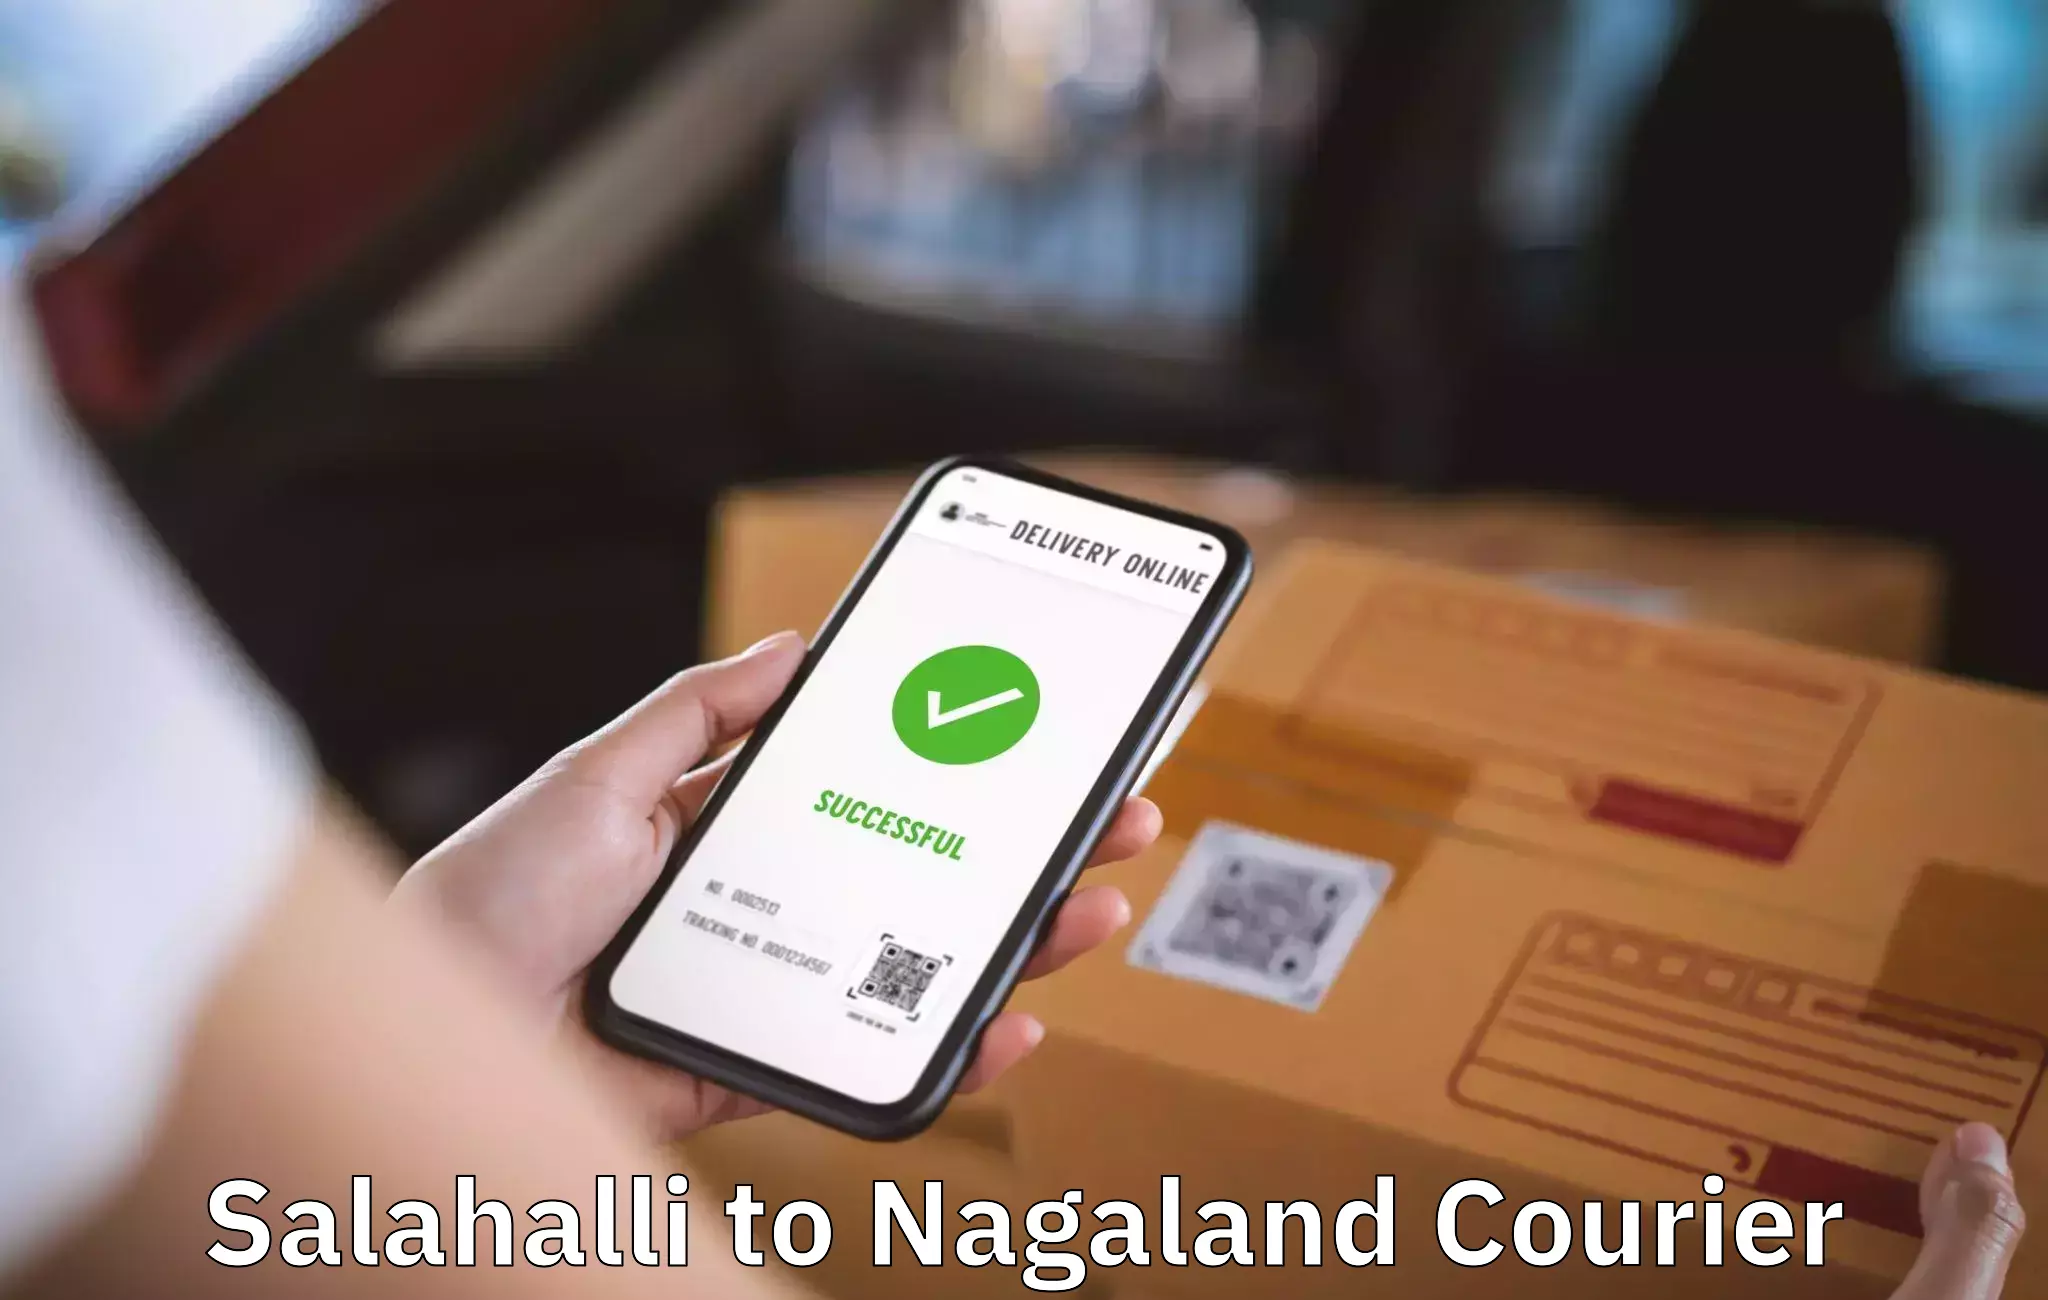 Expert packing and moving Salahalli to Nagaland